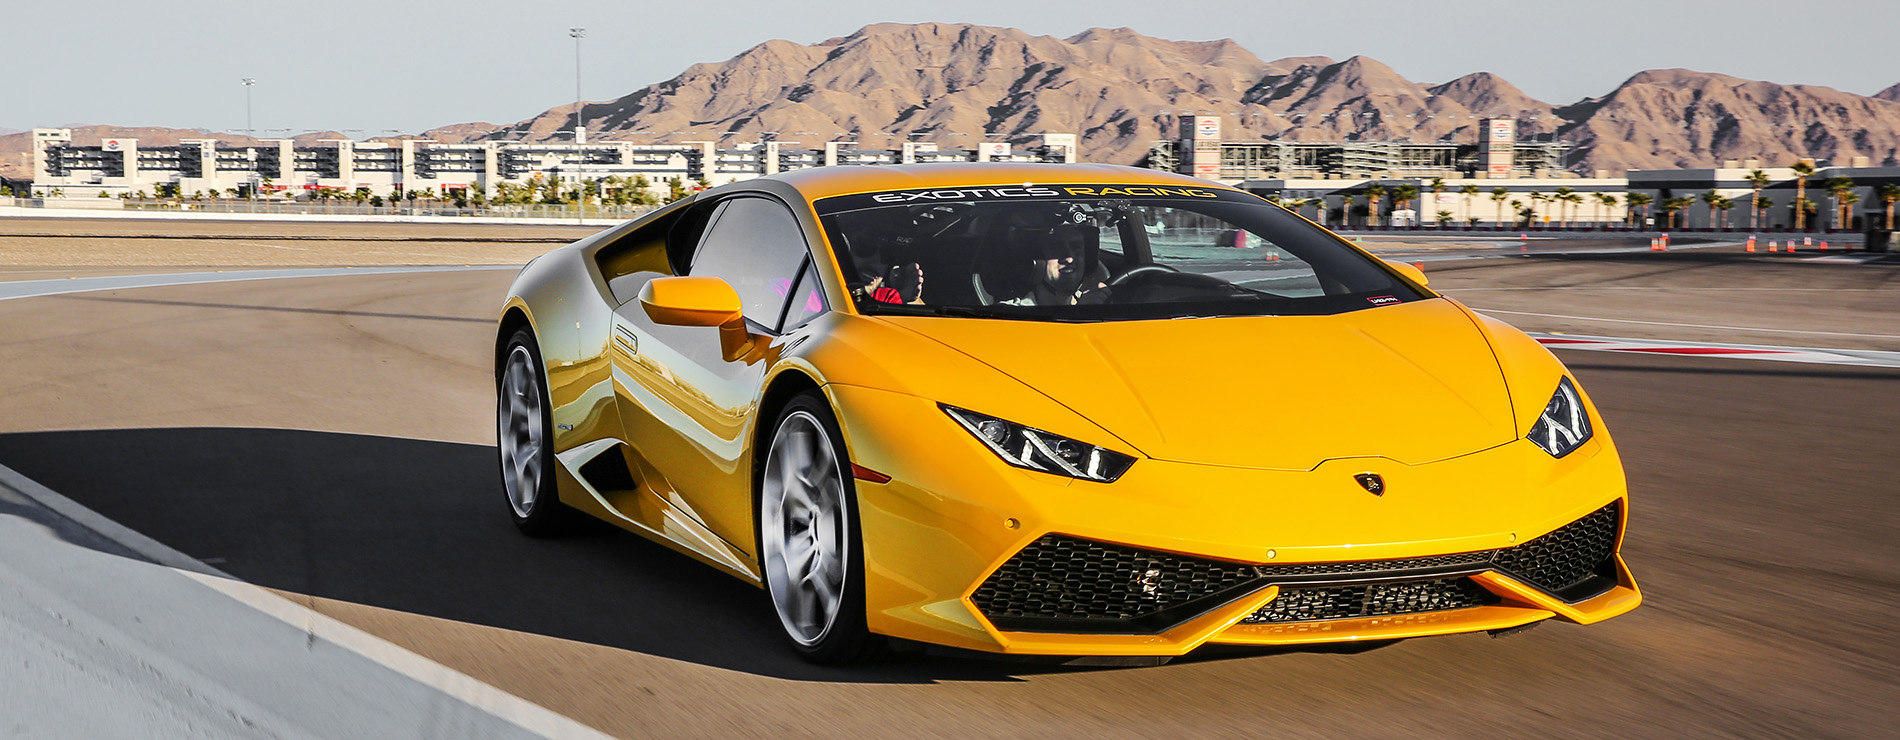 Exotics Racing | Las Vegas & Los Angeles Supercar Driving ...